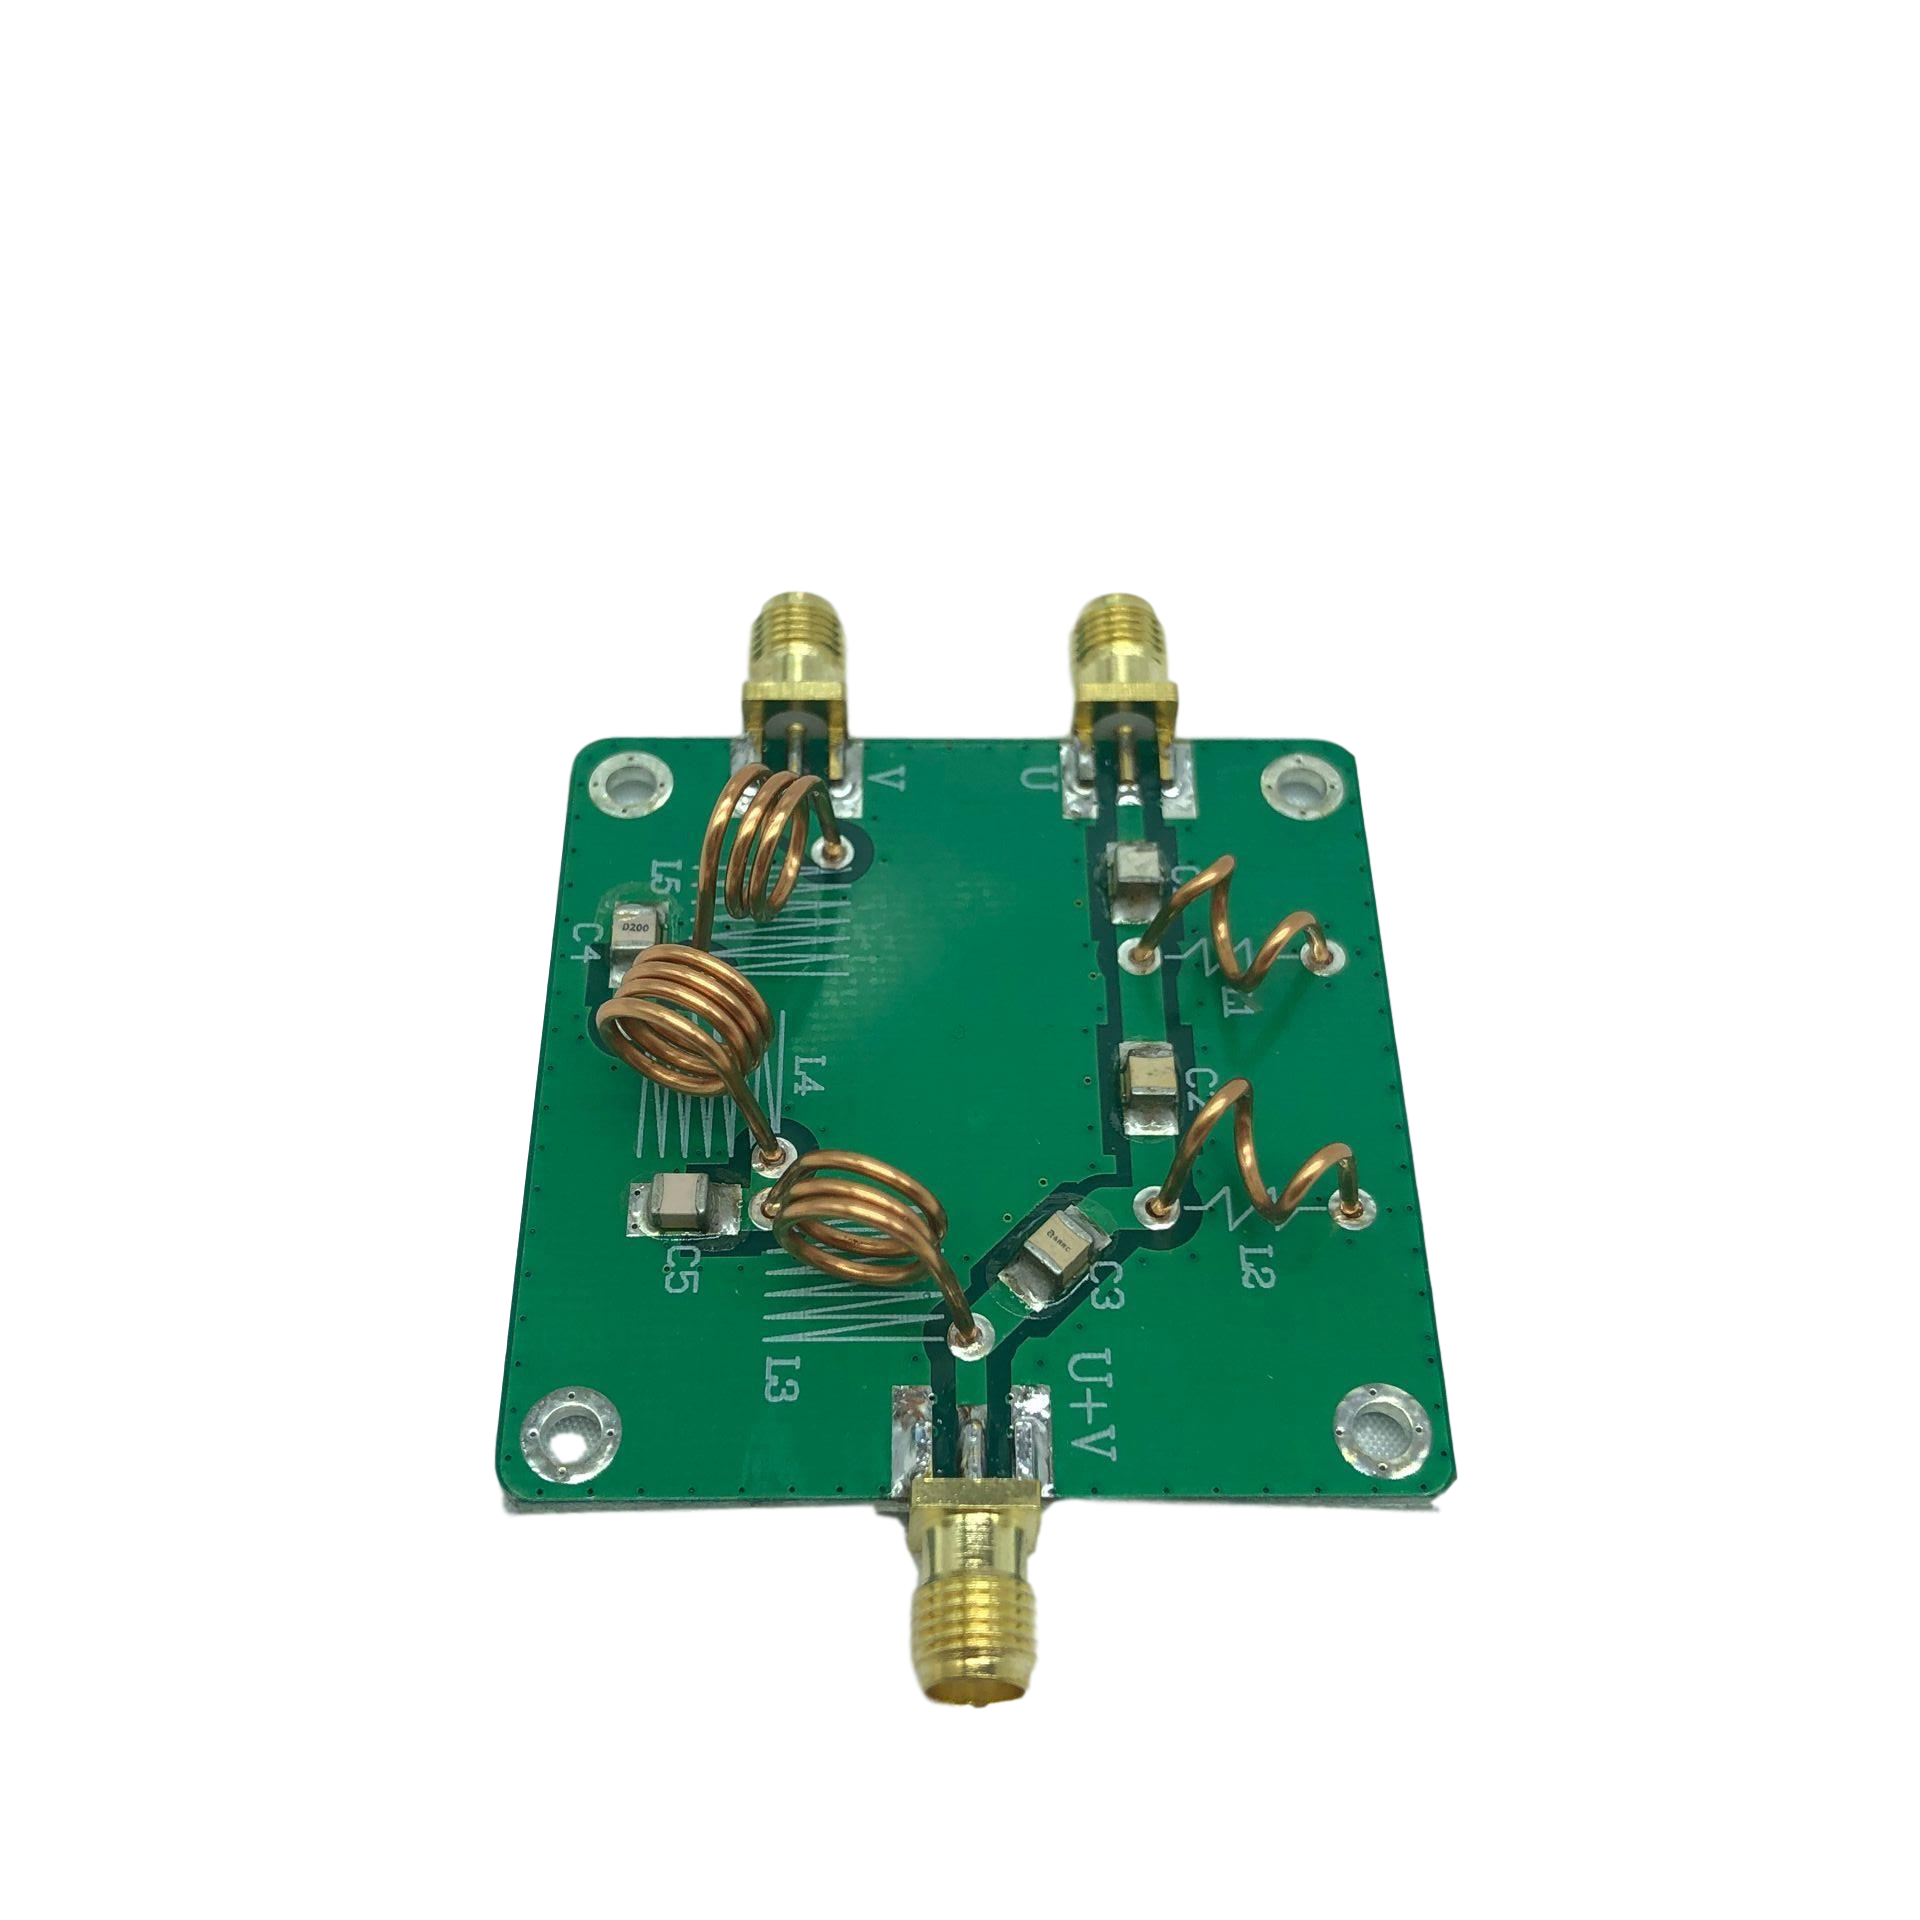 UV-Combiner-UV-Splitter-LC-Filter-Antenna-Combiner-Board-Passive-Module-1800190-1